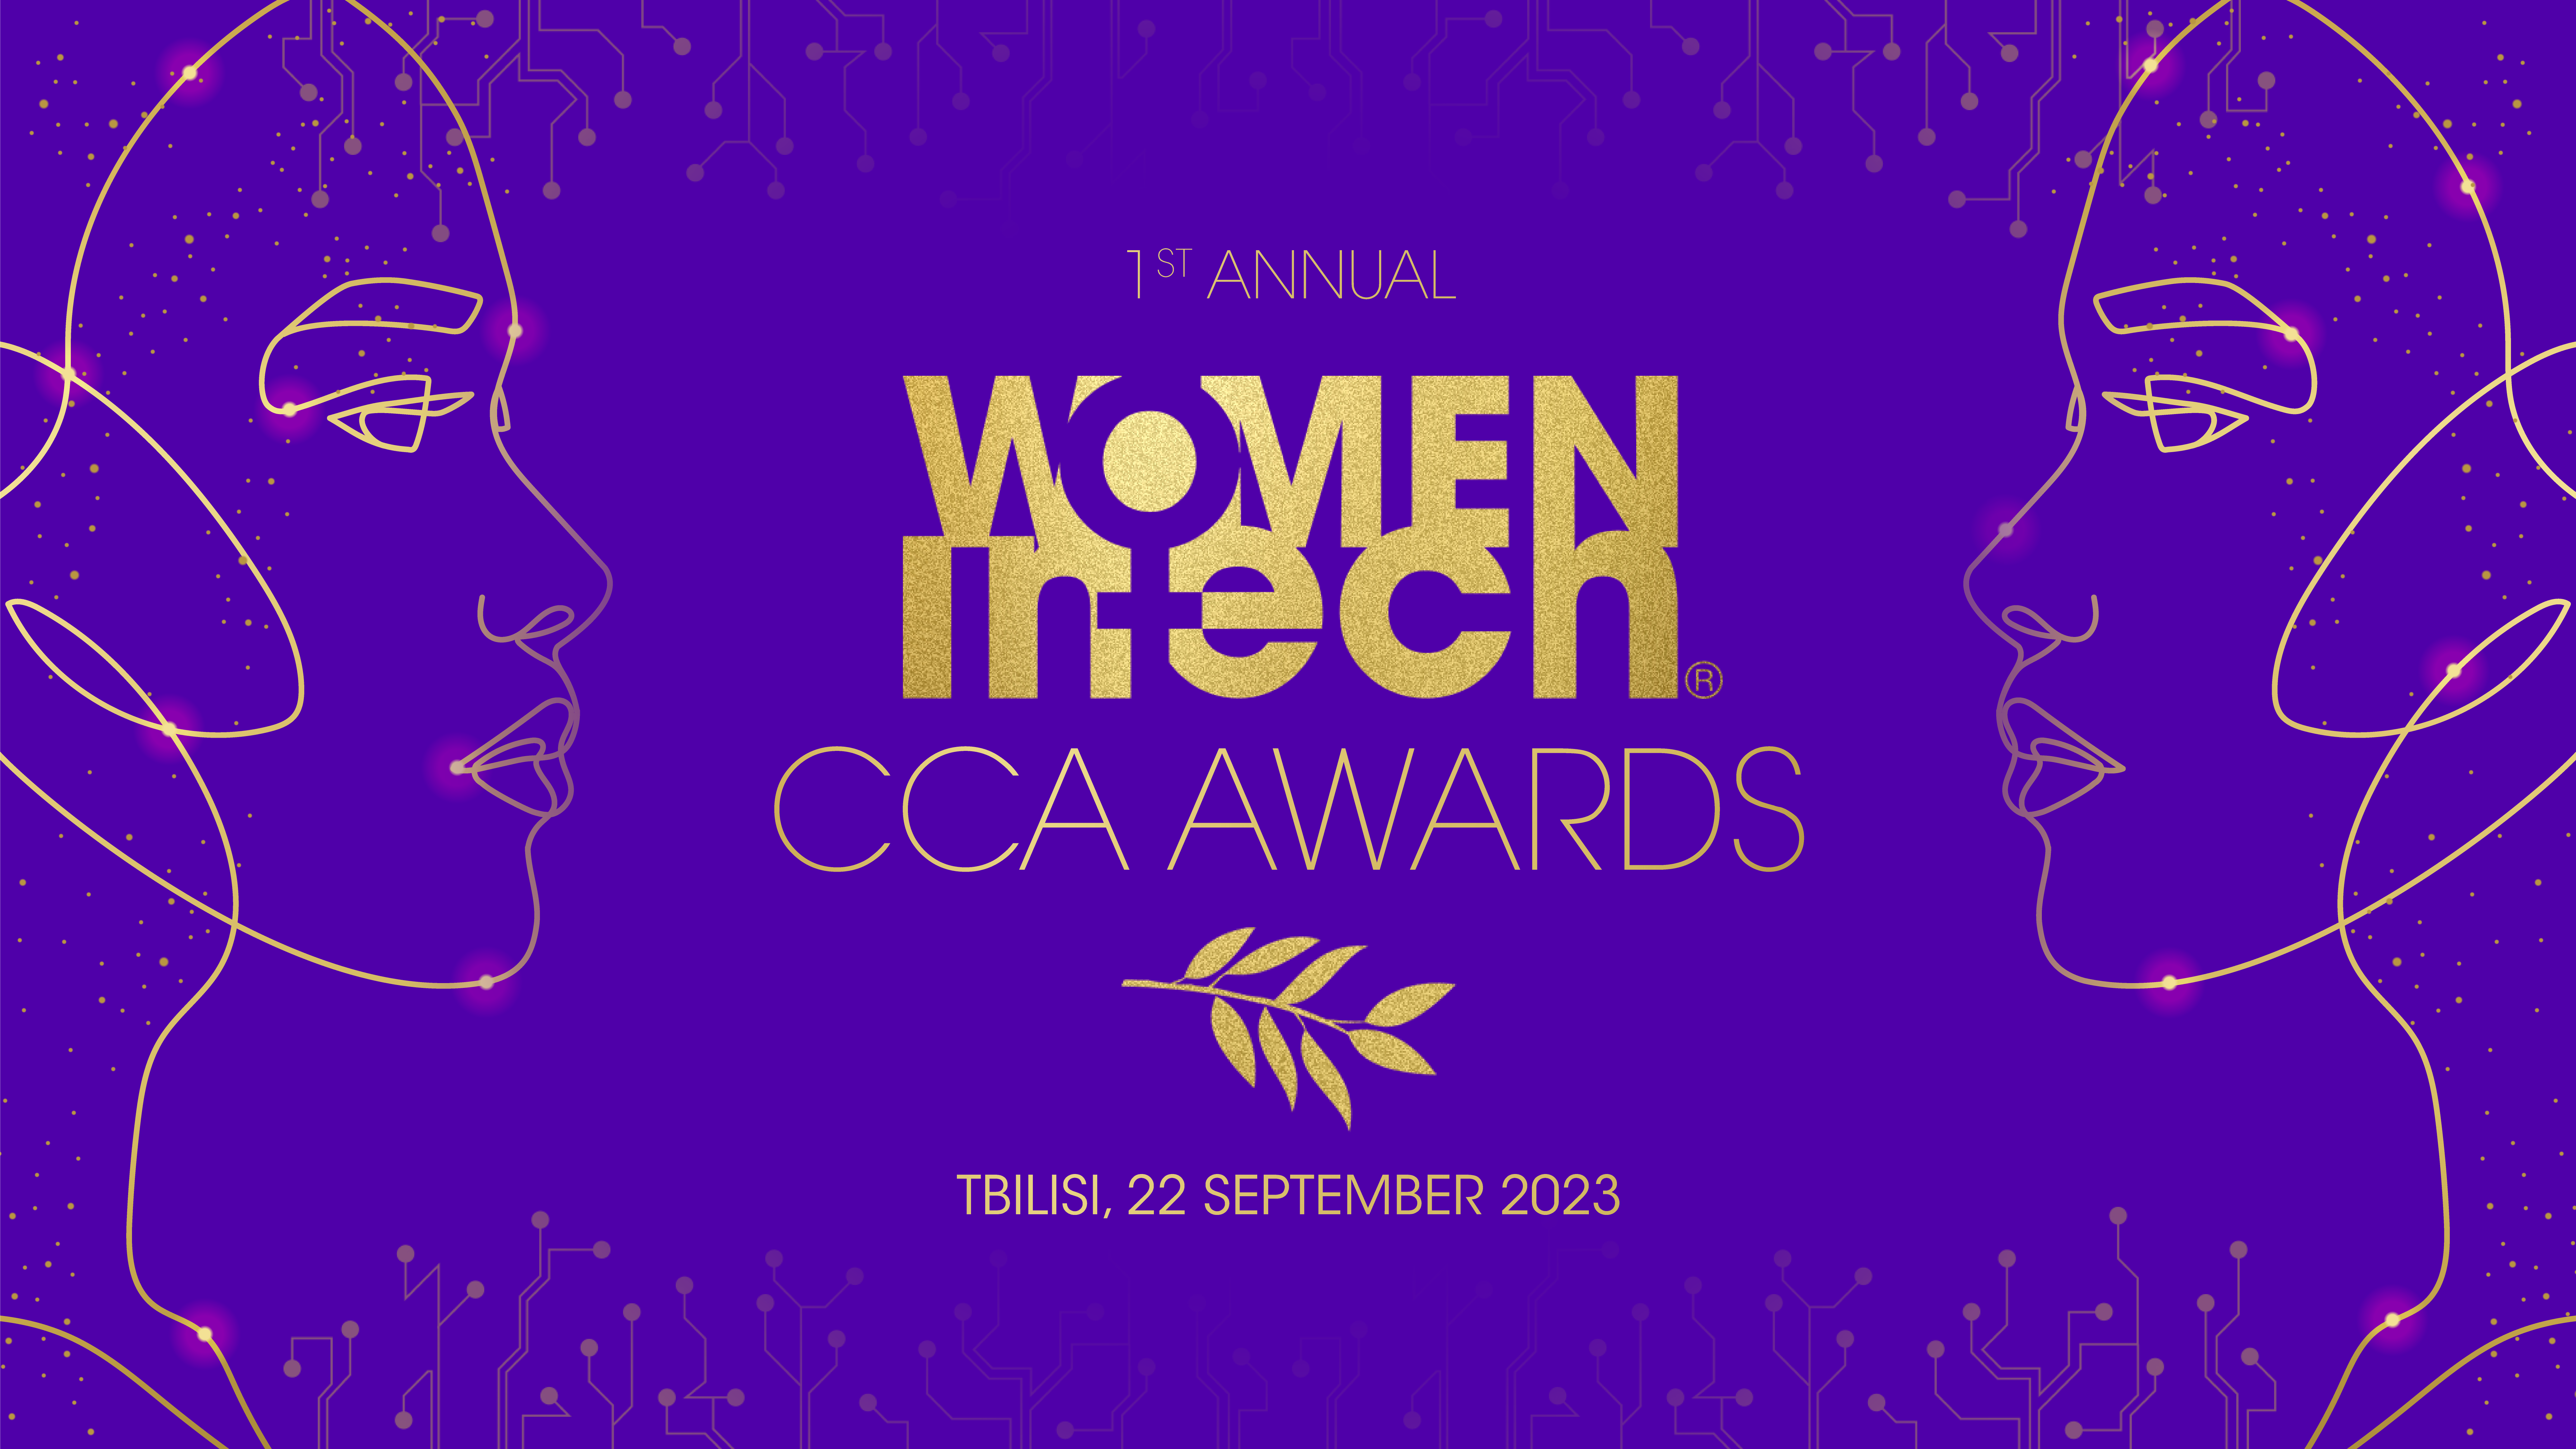 Women in Tech Global Awards - Dubai, October 2022